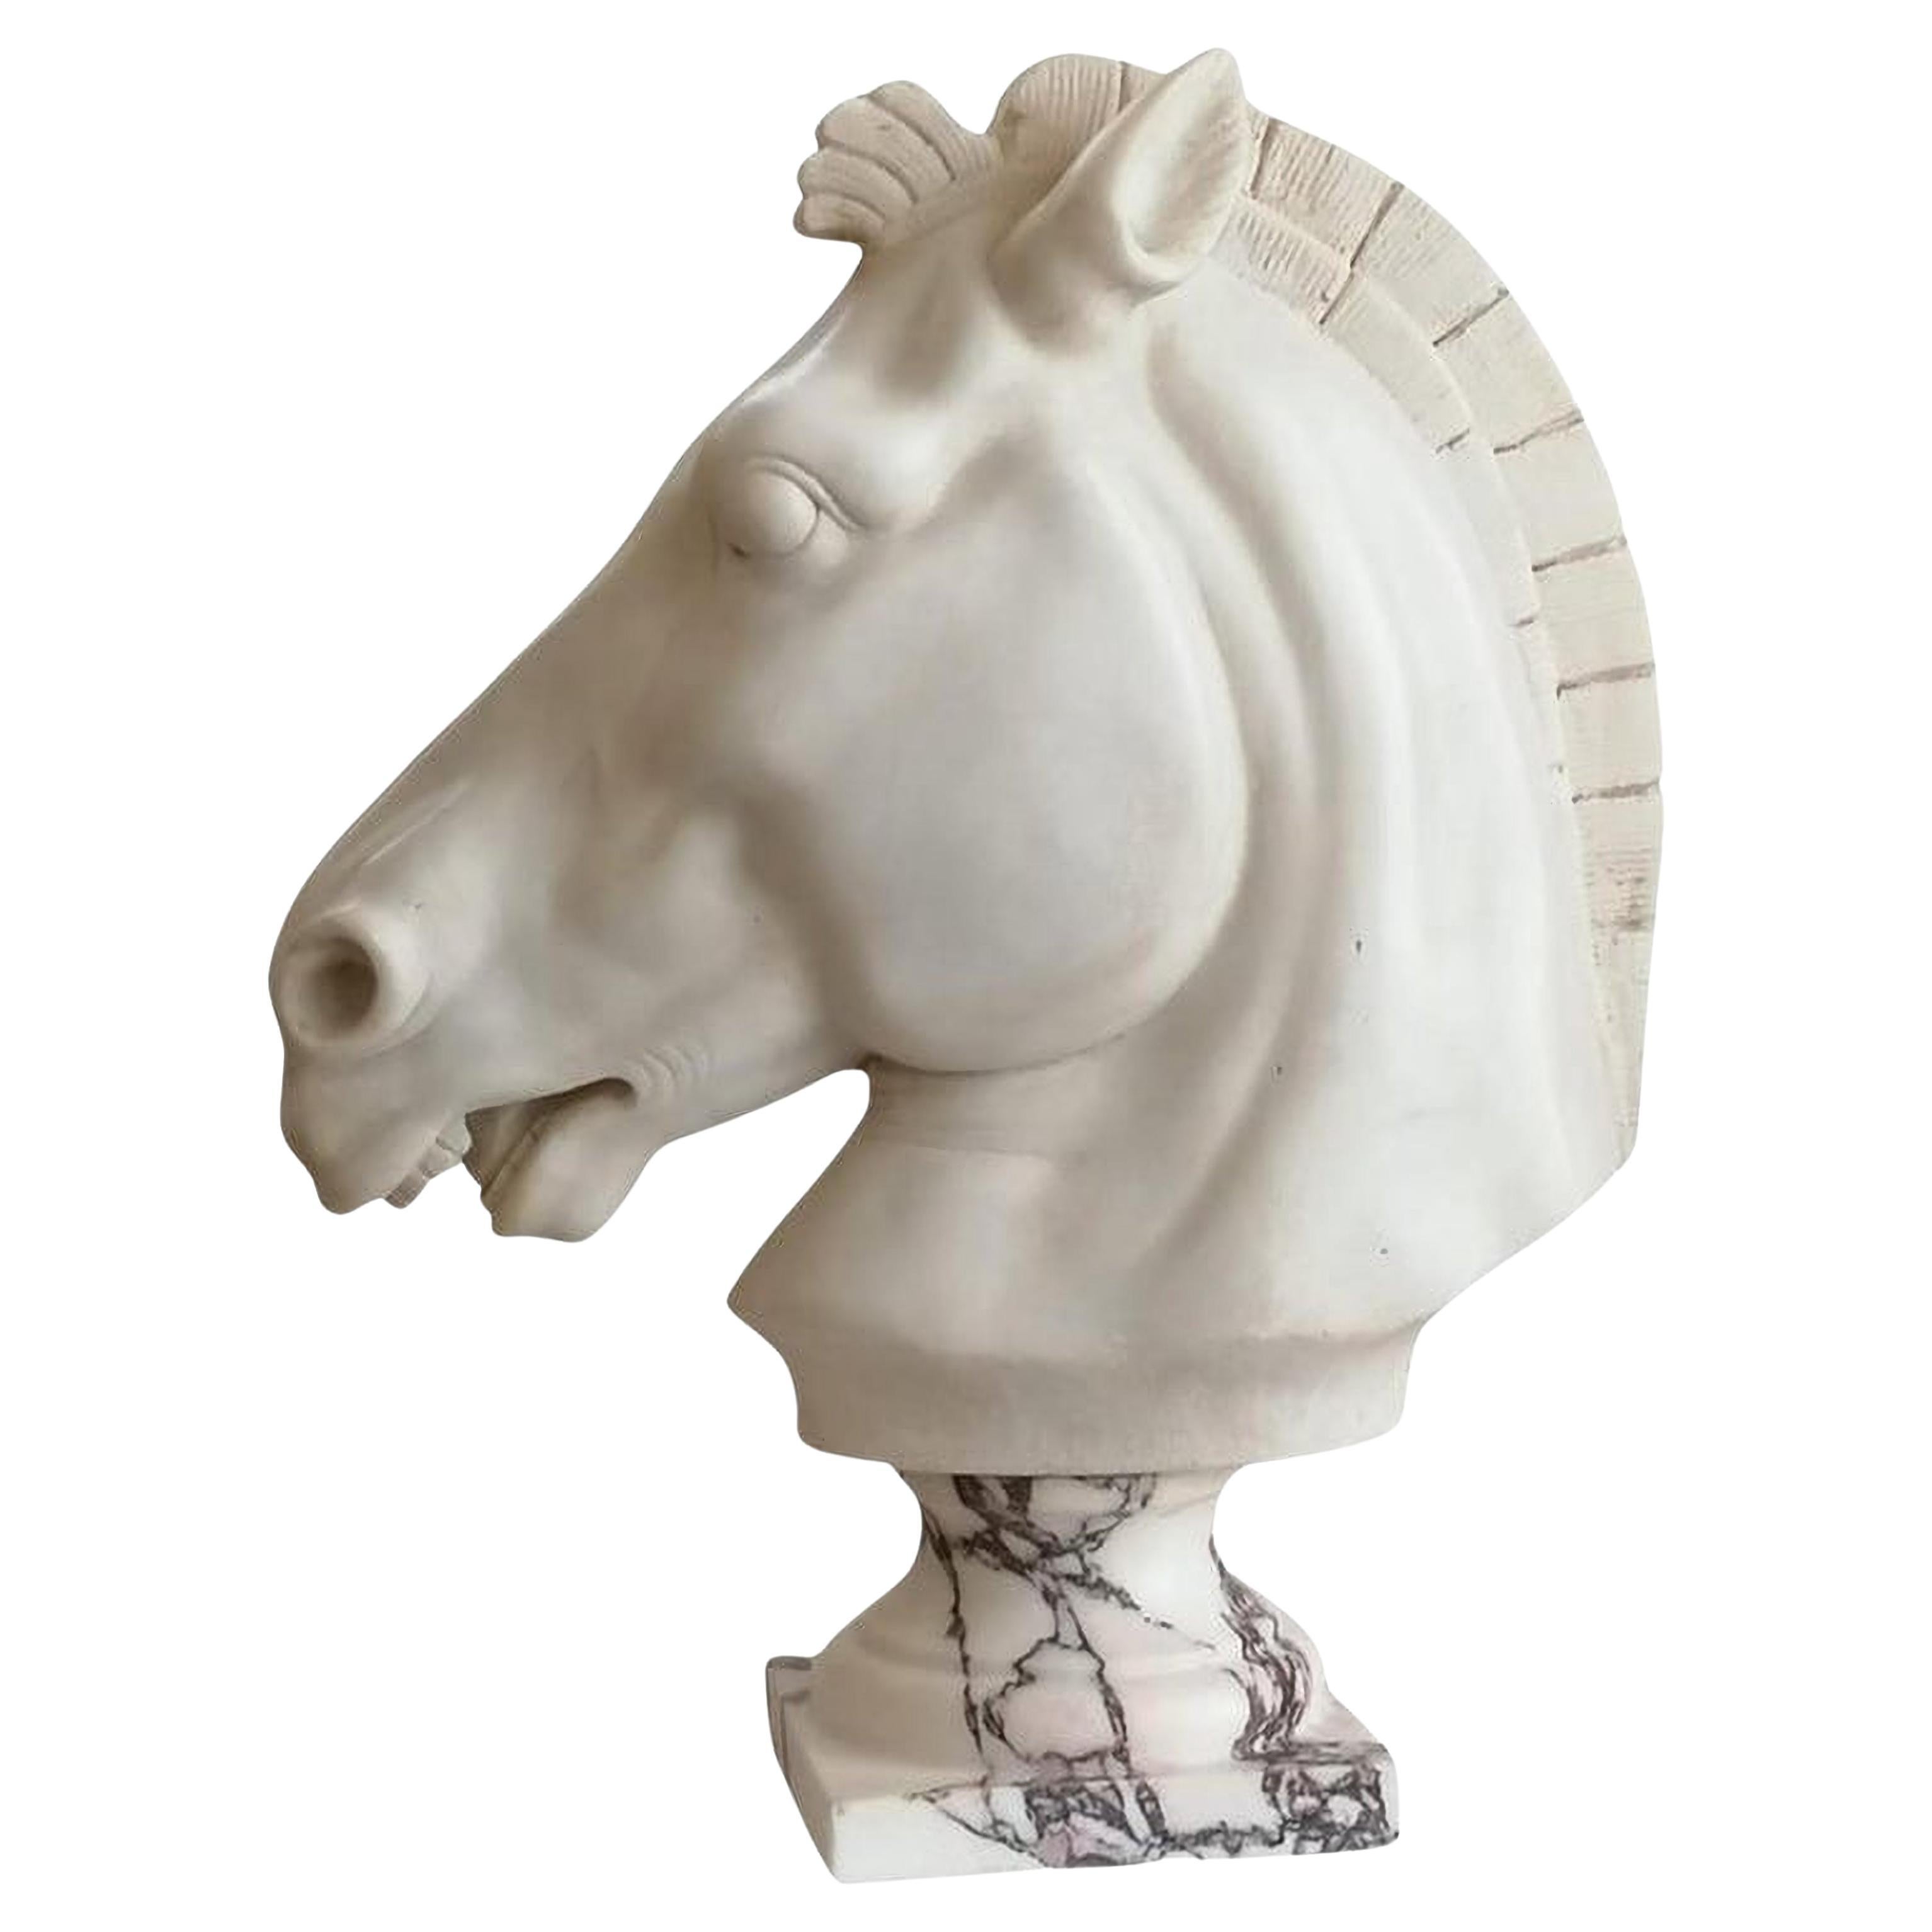 Italian Marble Carrara Sculpture "Horse Head", Early 20th Century